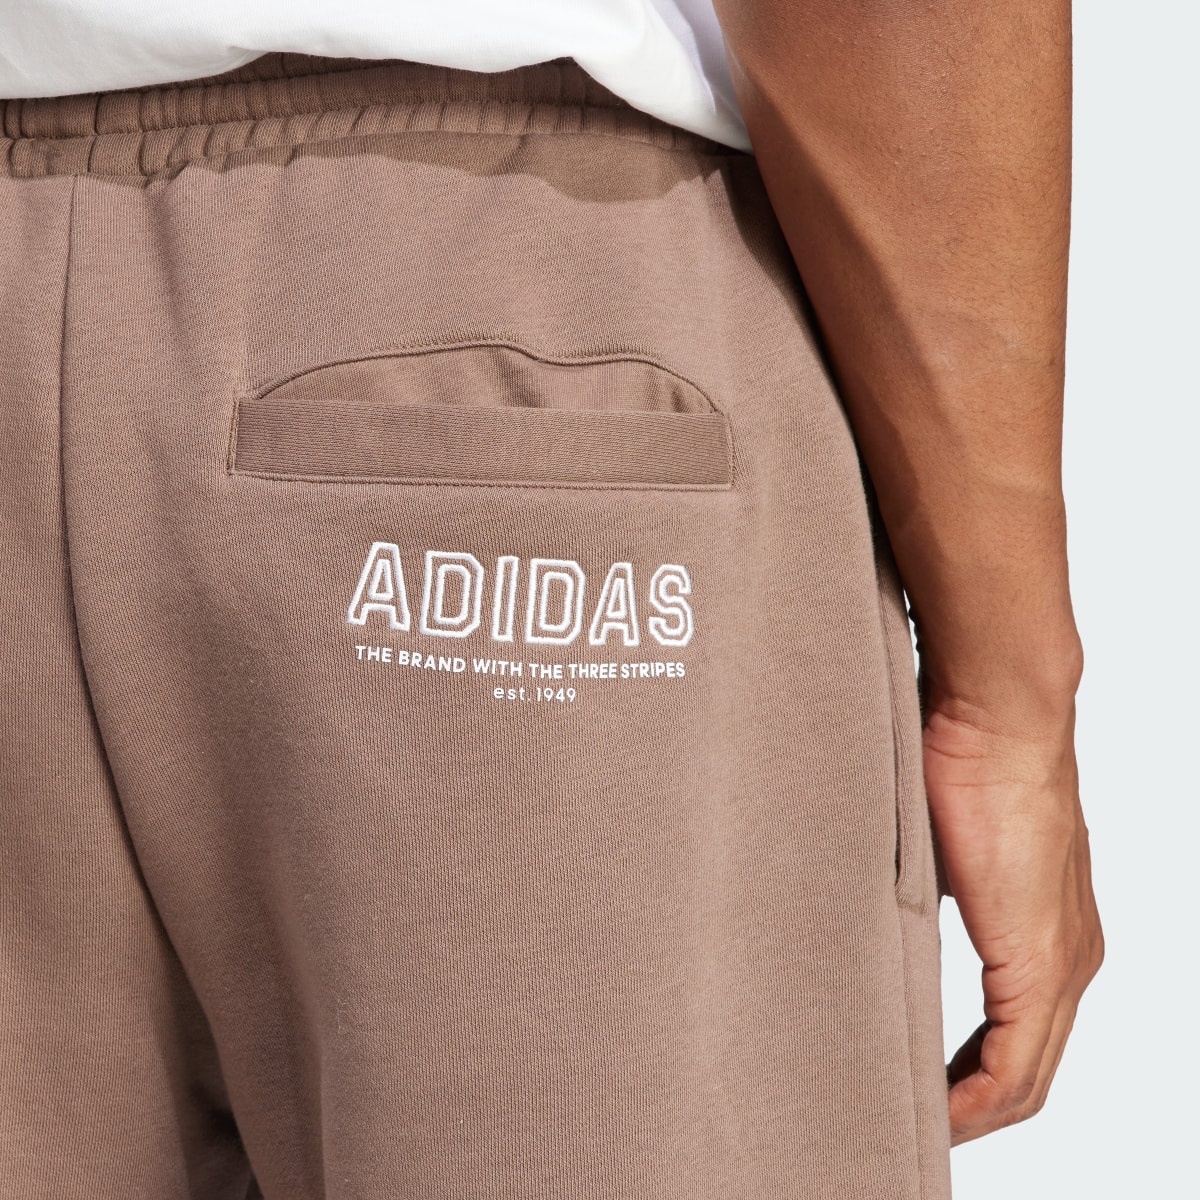 Adidas Pants Last Days of Summer. 5